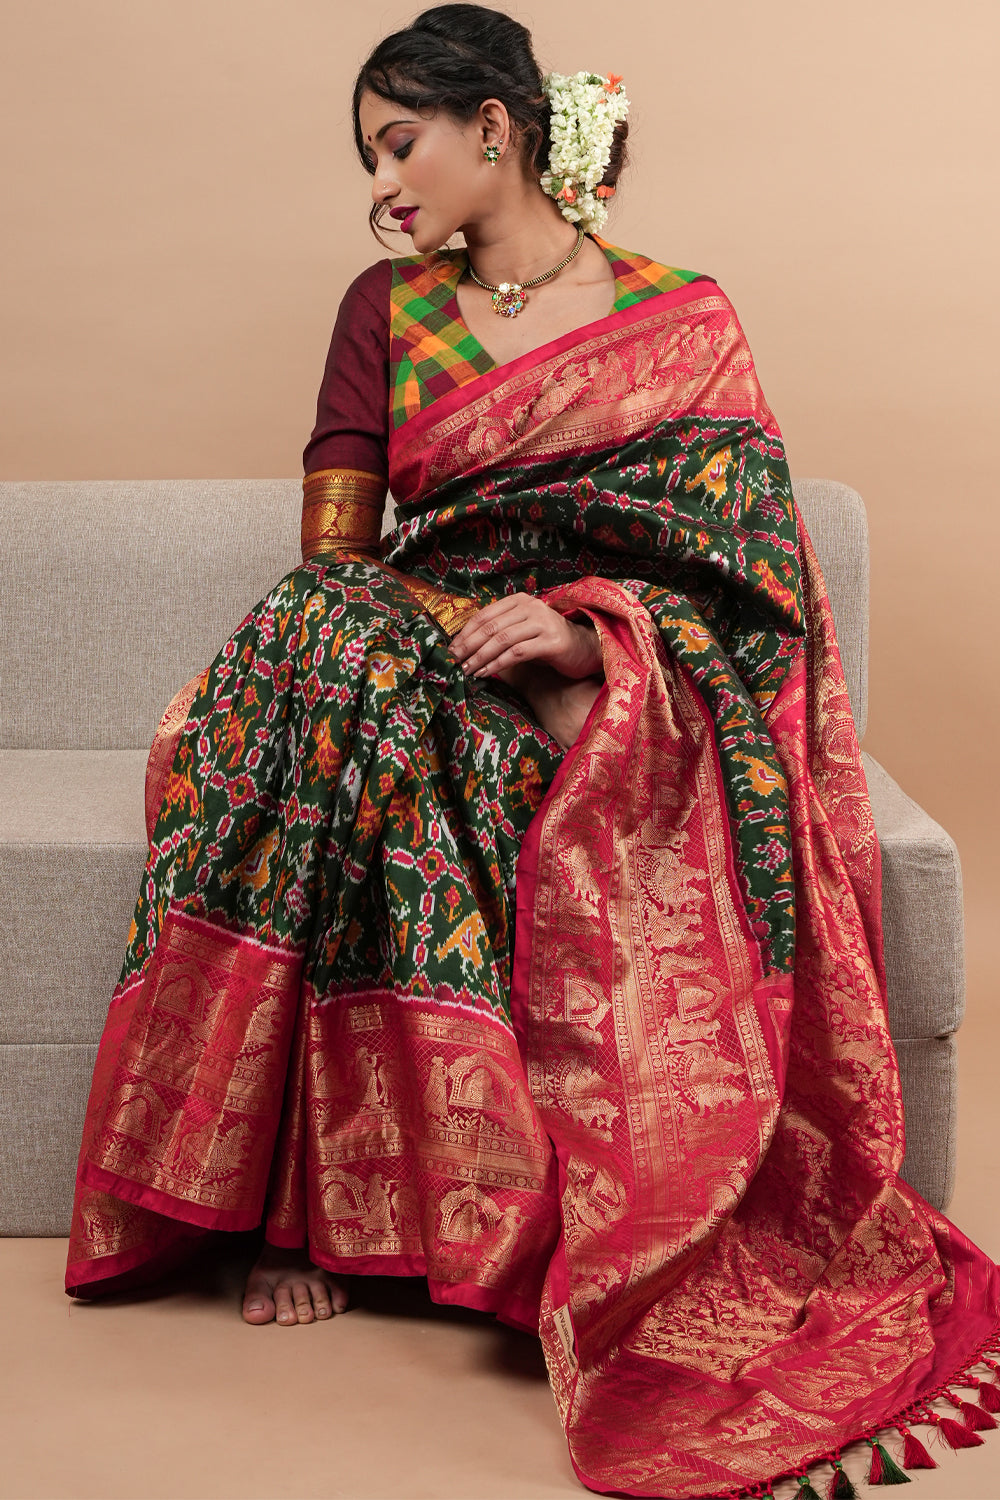 Exquisite Ikkat Kanjivaram Fusion Silk Saree in Deep Green with Grand Pallu and Wide Zari Border | SILK MARK CERTIFIED